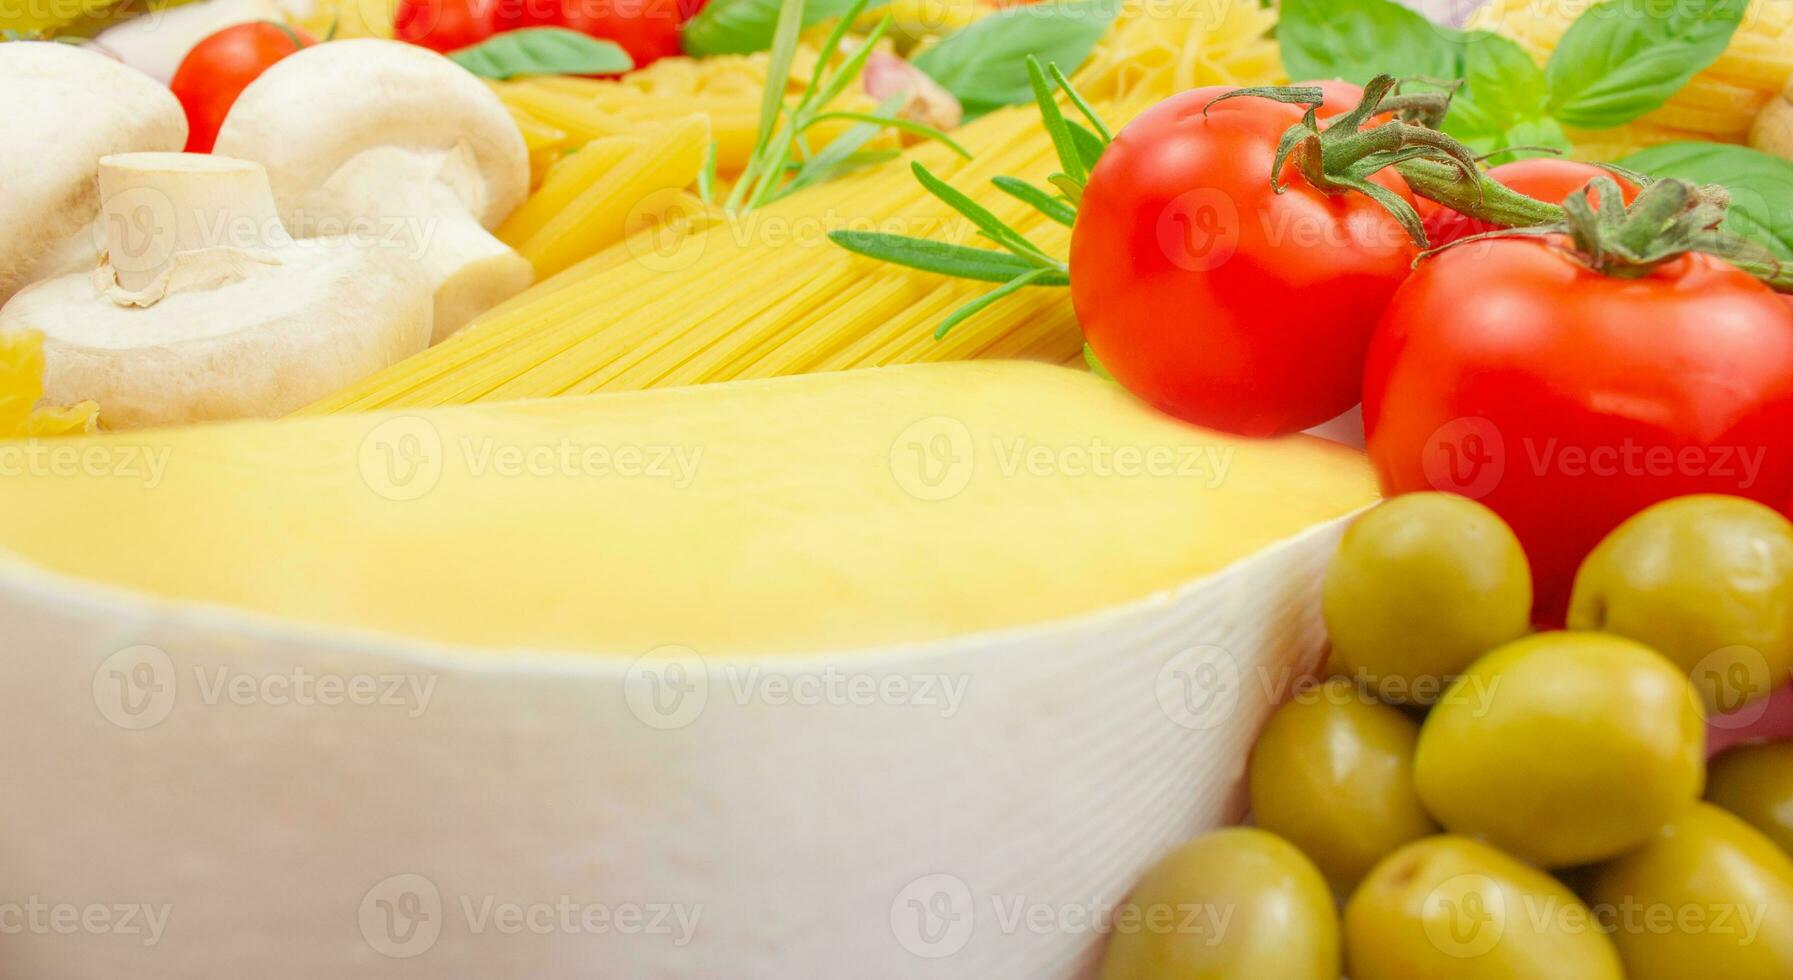 Ingredients for preparing different types of pasta. Italian cuisine. photo